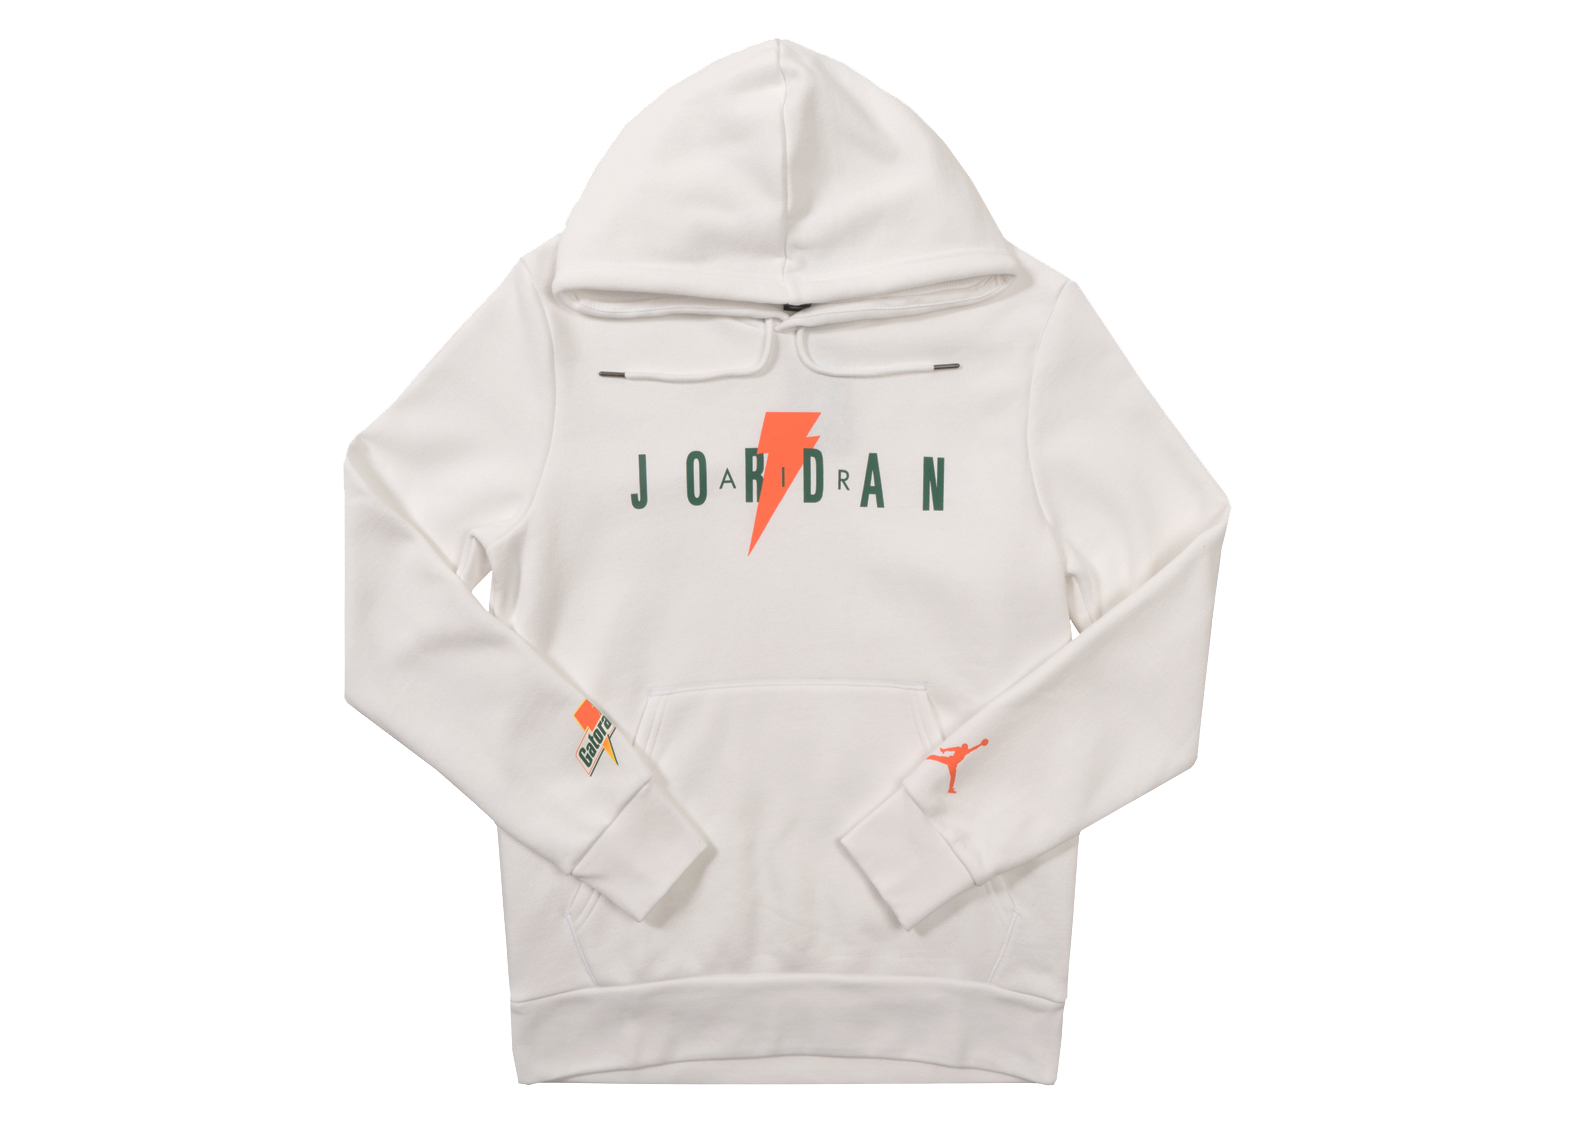 gatorade x jordan hoodie